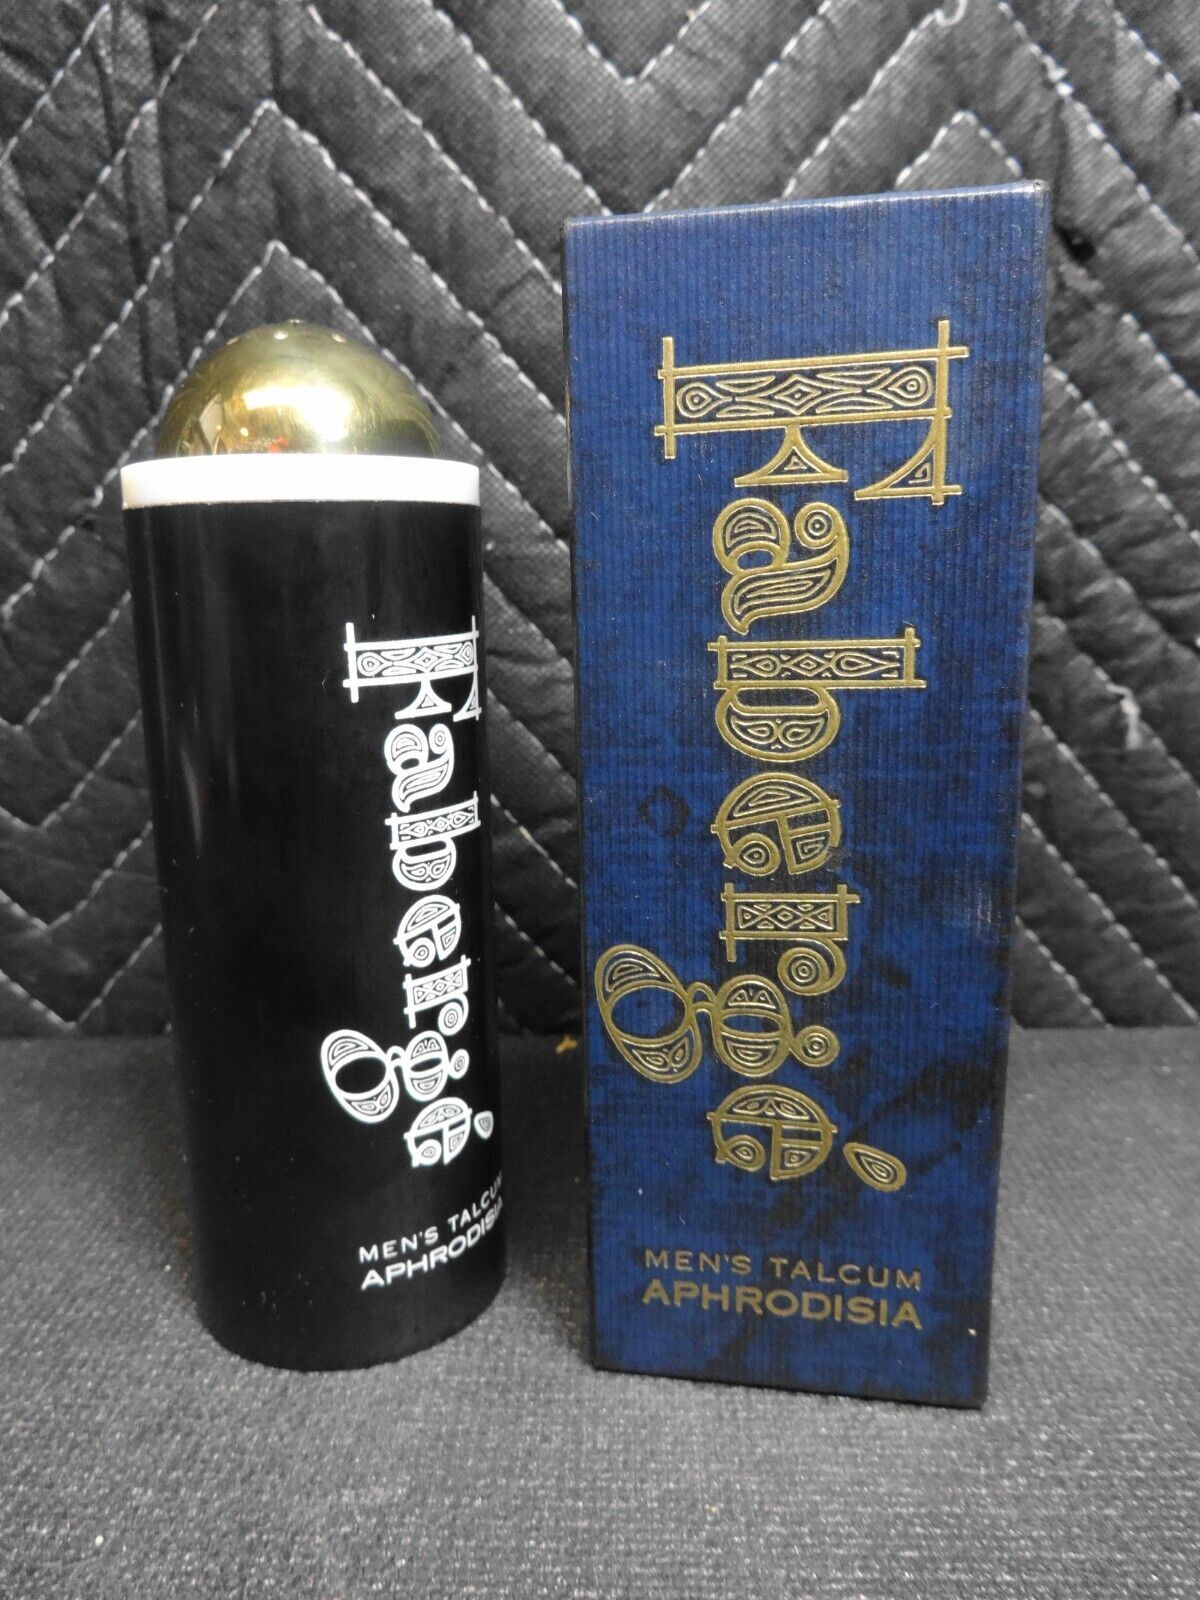 Vintage Aphrodisia Men's Talcum Powder 4.0 Oz. By Faberge in original box